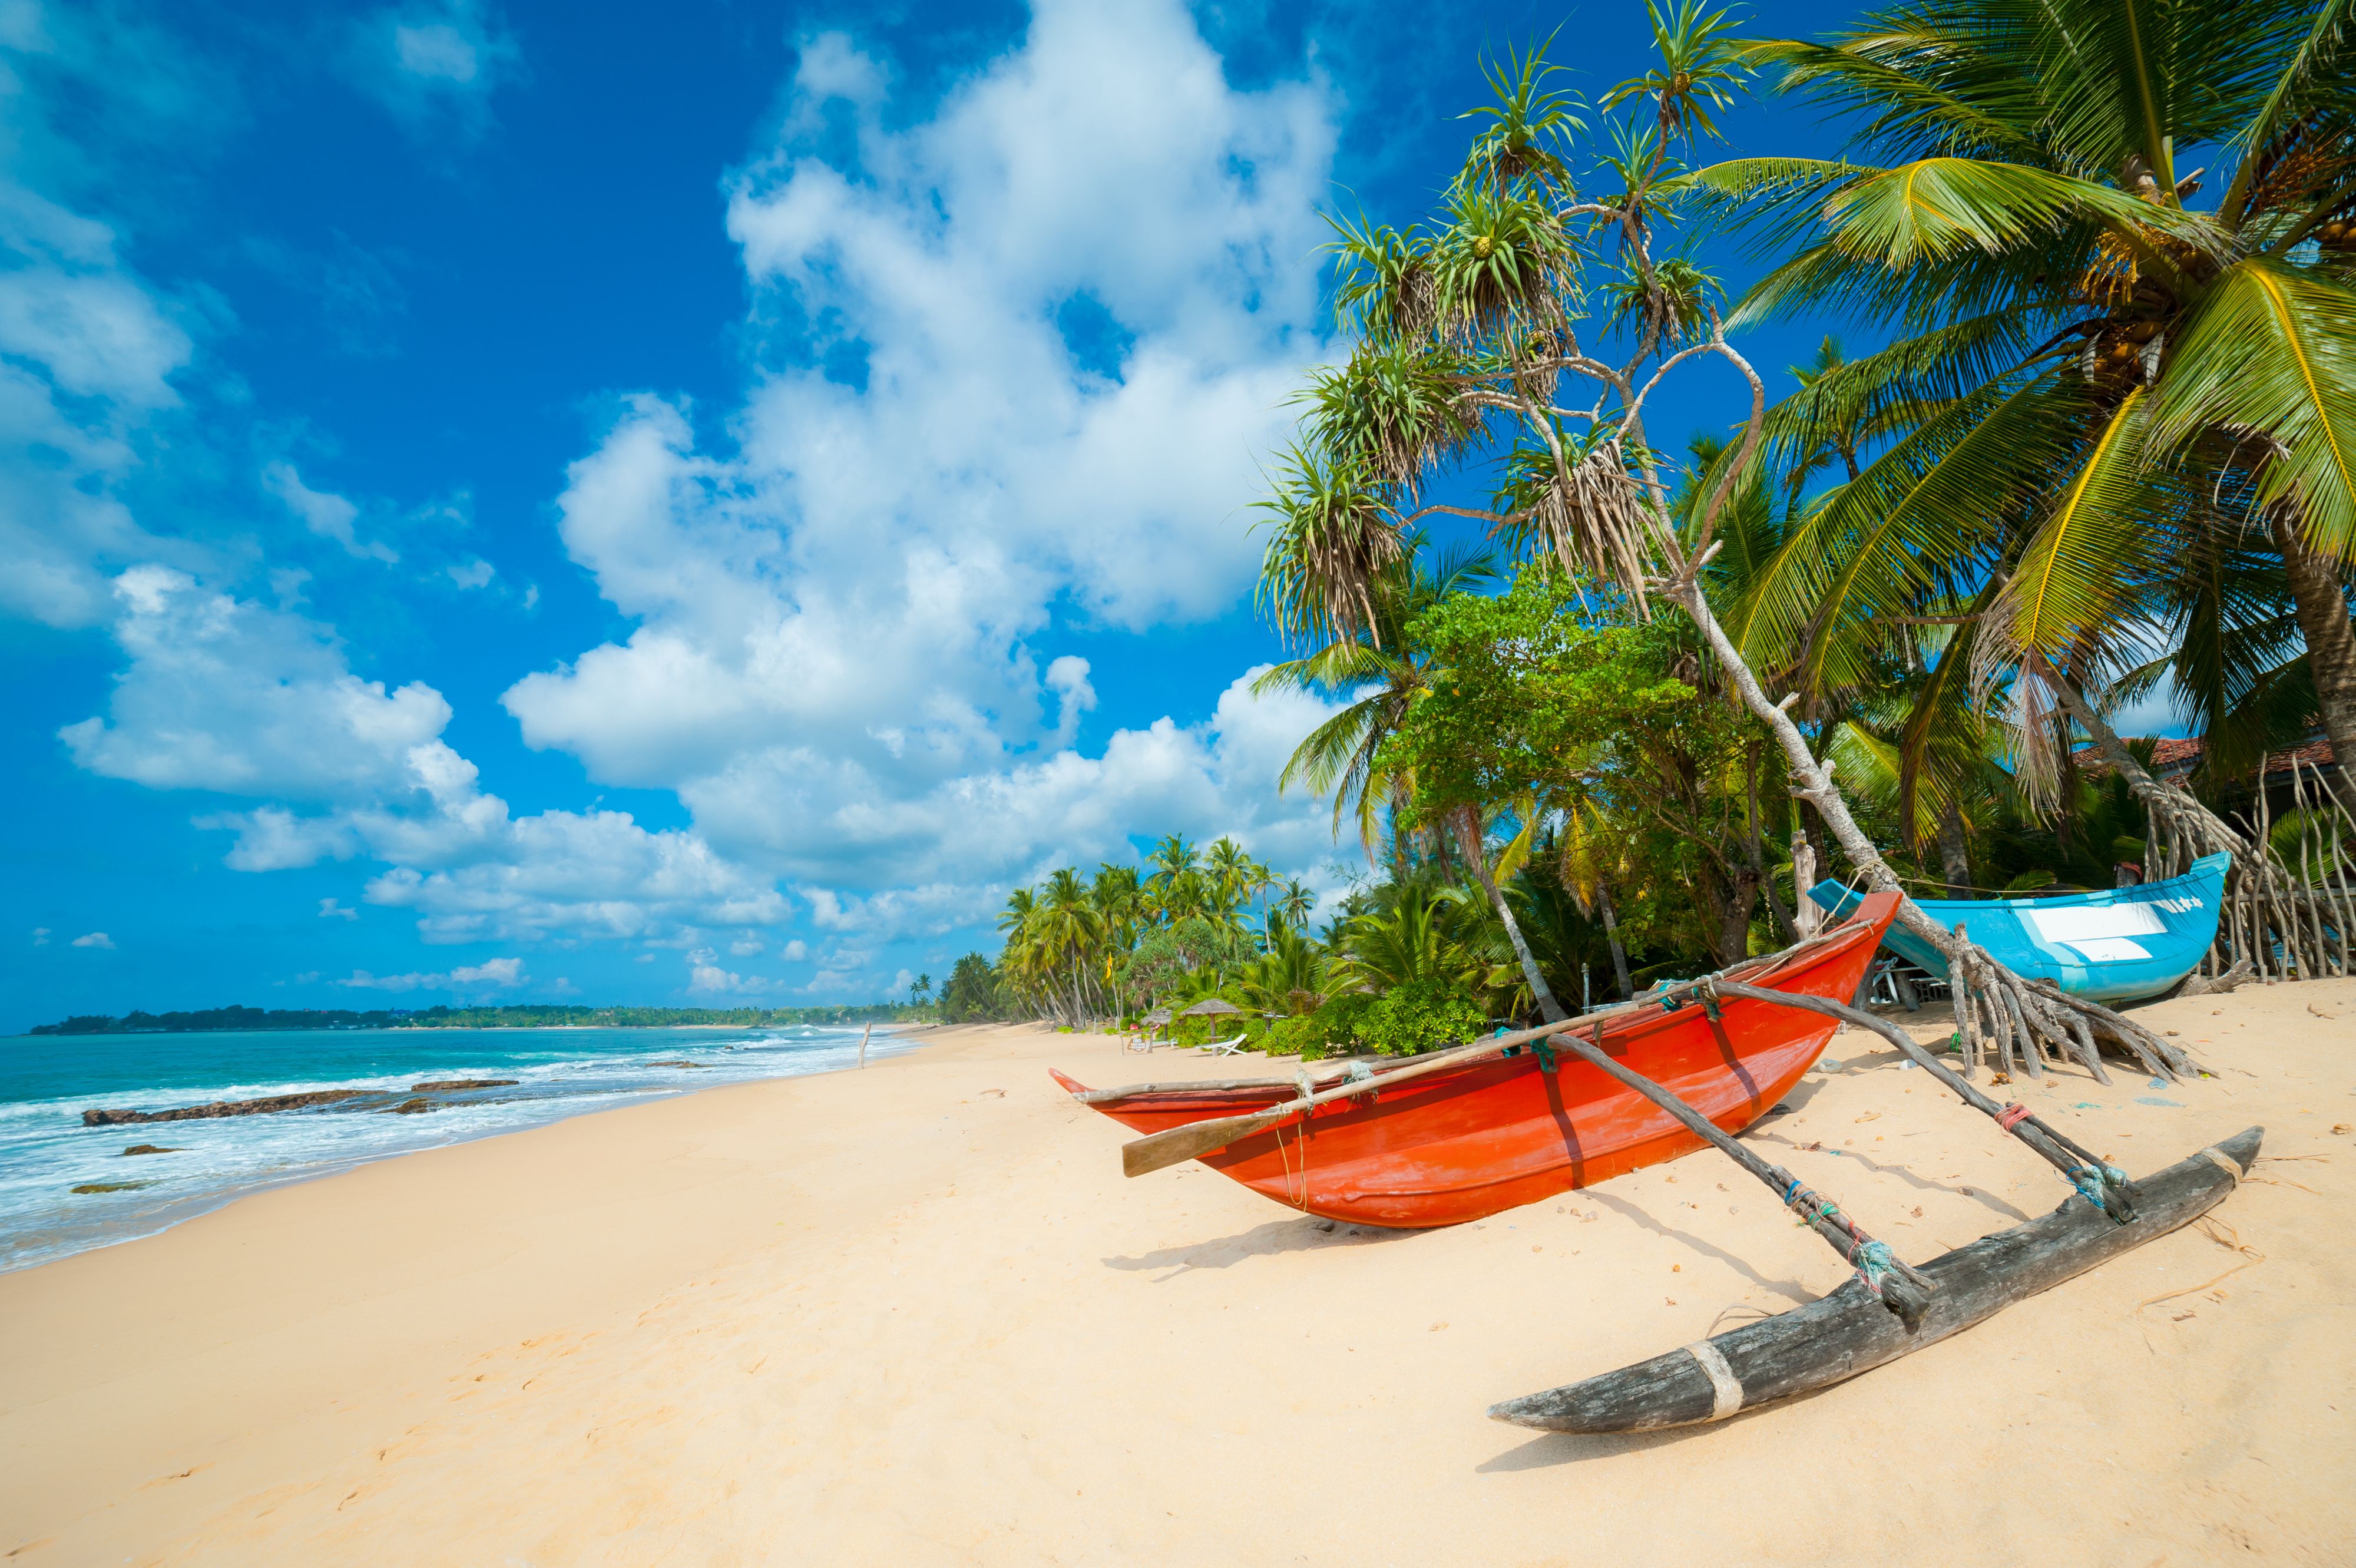 Шри ланка км. Пляж Ваддува Шри Ланка. Пляж Негомбо Шри Ланка. Хиккадува Шри Ланка. Тангалле Шри Ланка.